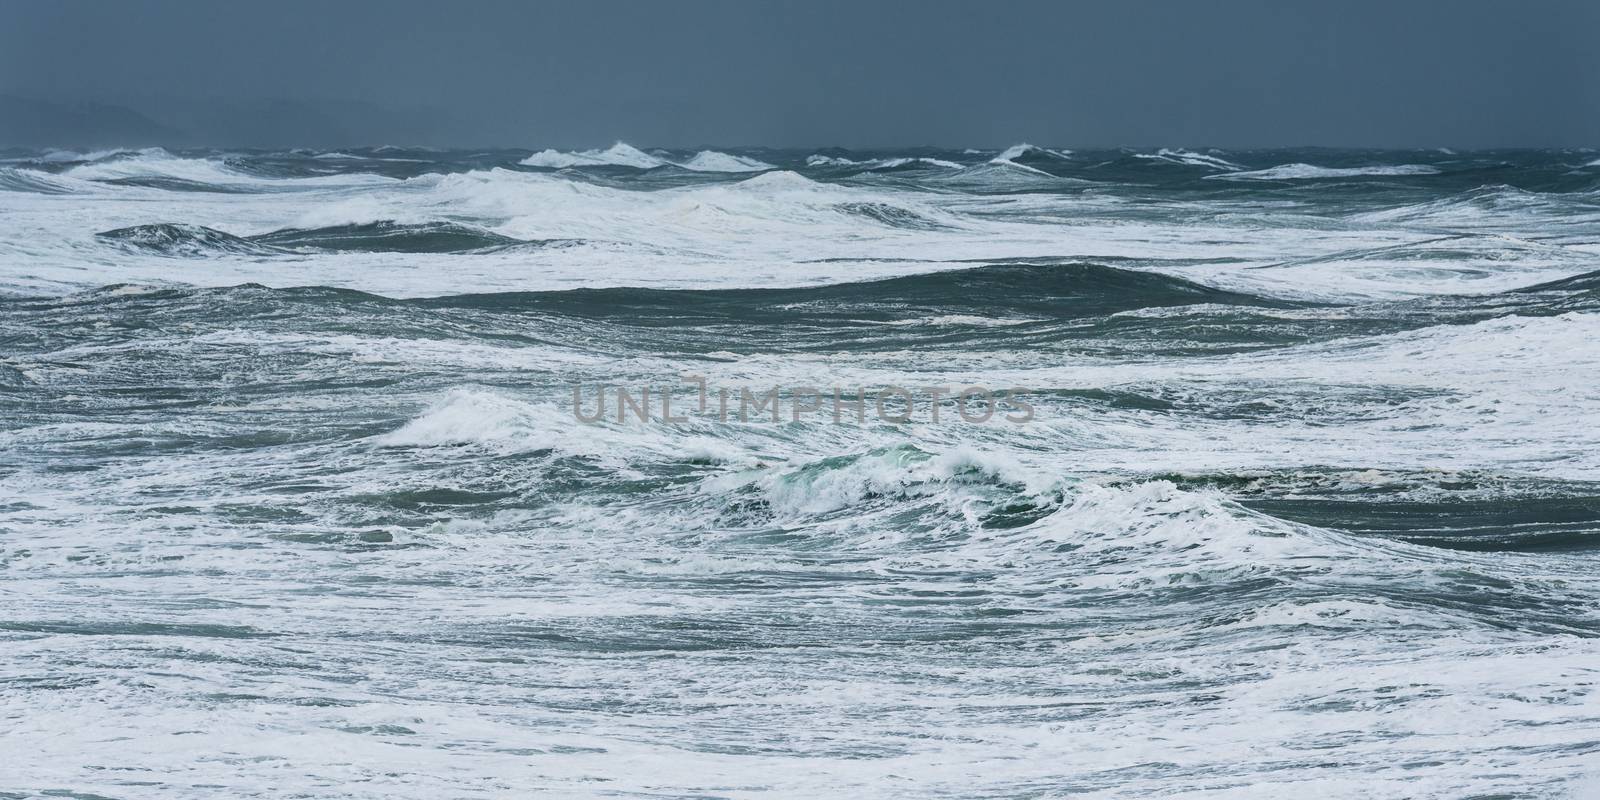 Storm waves in the Atlantic Ocean by dutourdumonde